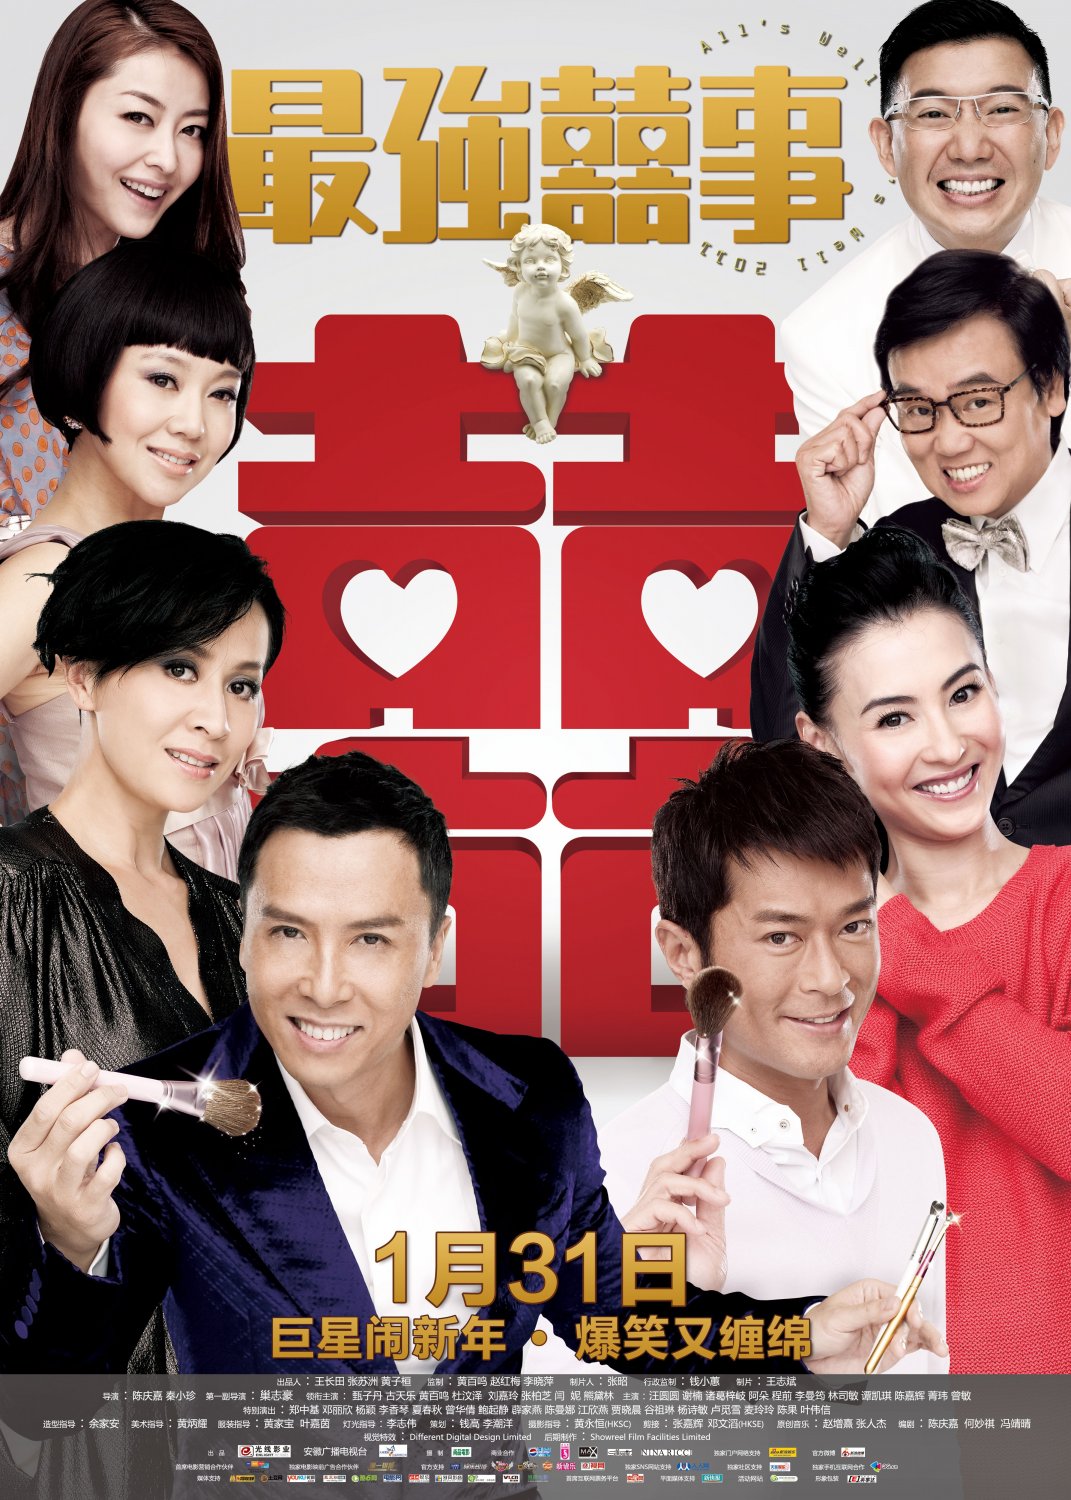 Extra Large Movie Poster Image for Ji keung hei si 2011 